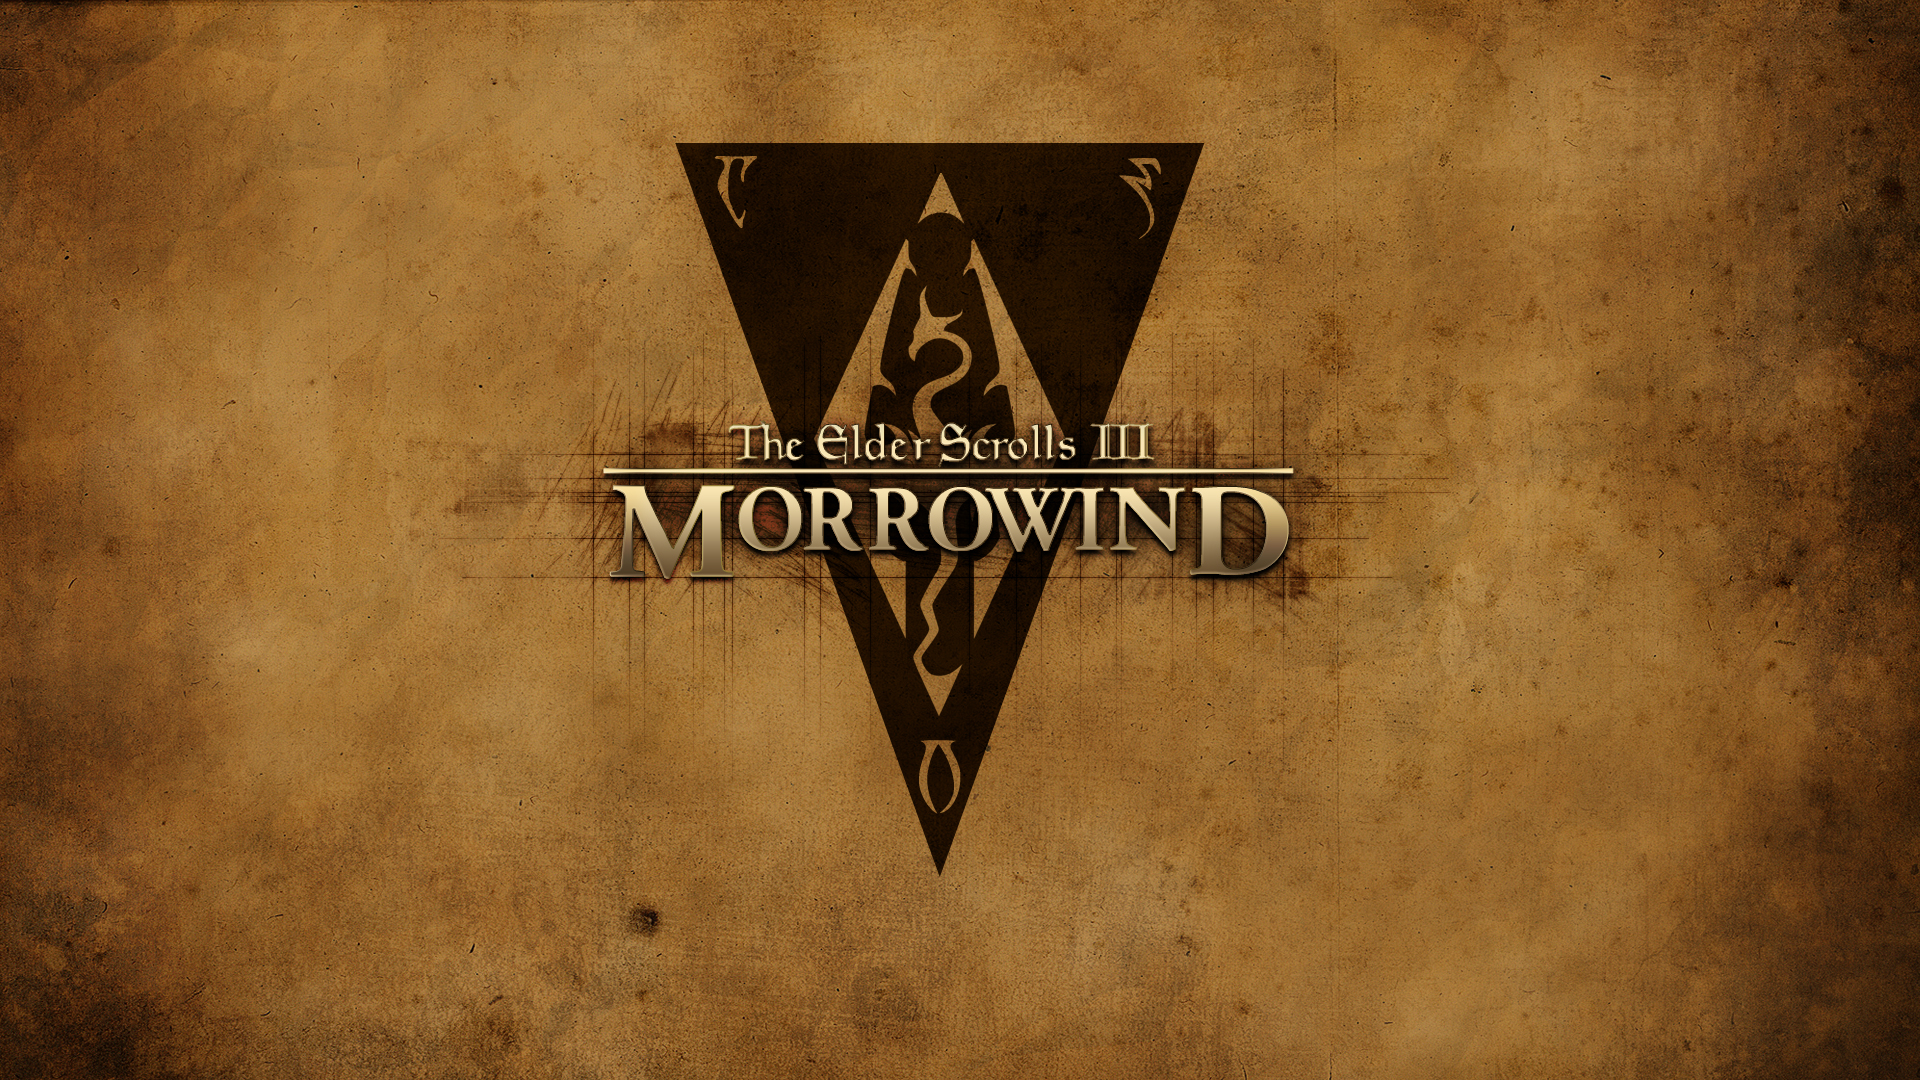 the elder scrolls iii: morrowind, video game, the elder scrolls